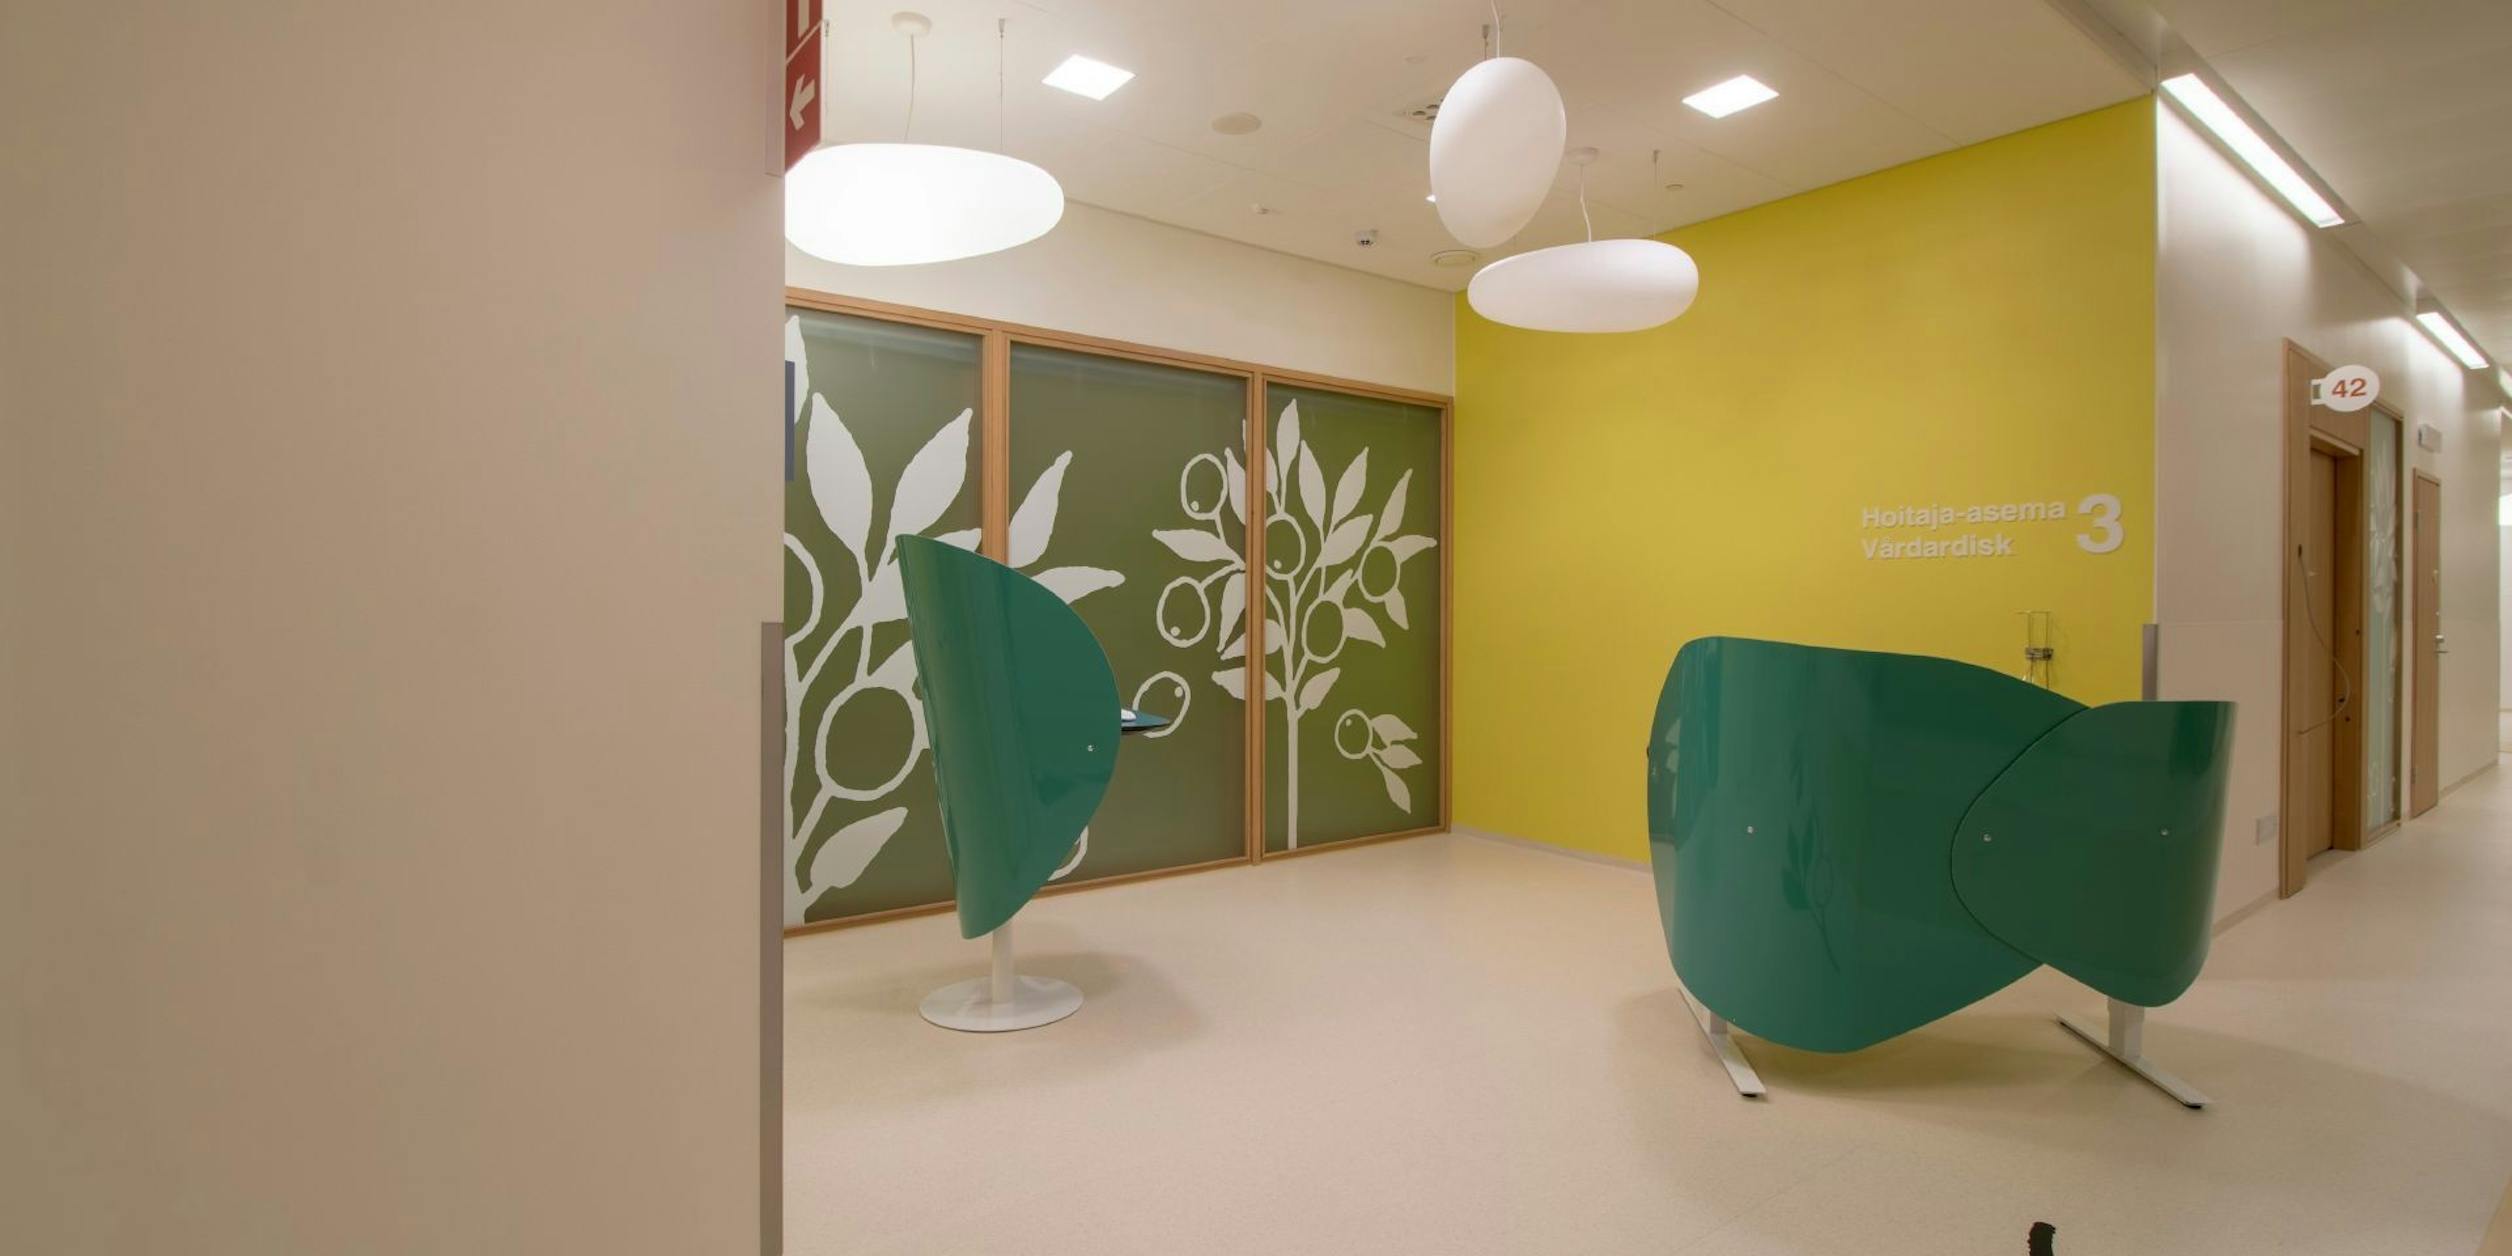 A hospital waiting area painted with Tikkurila paints